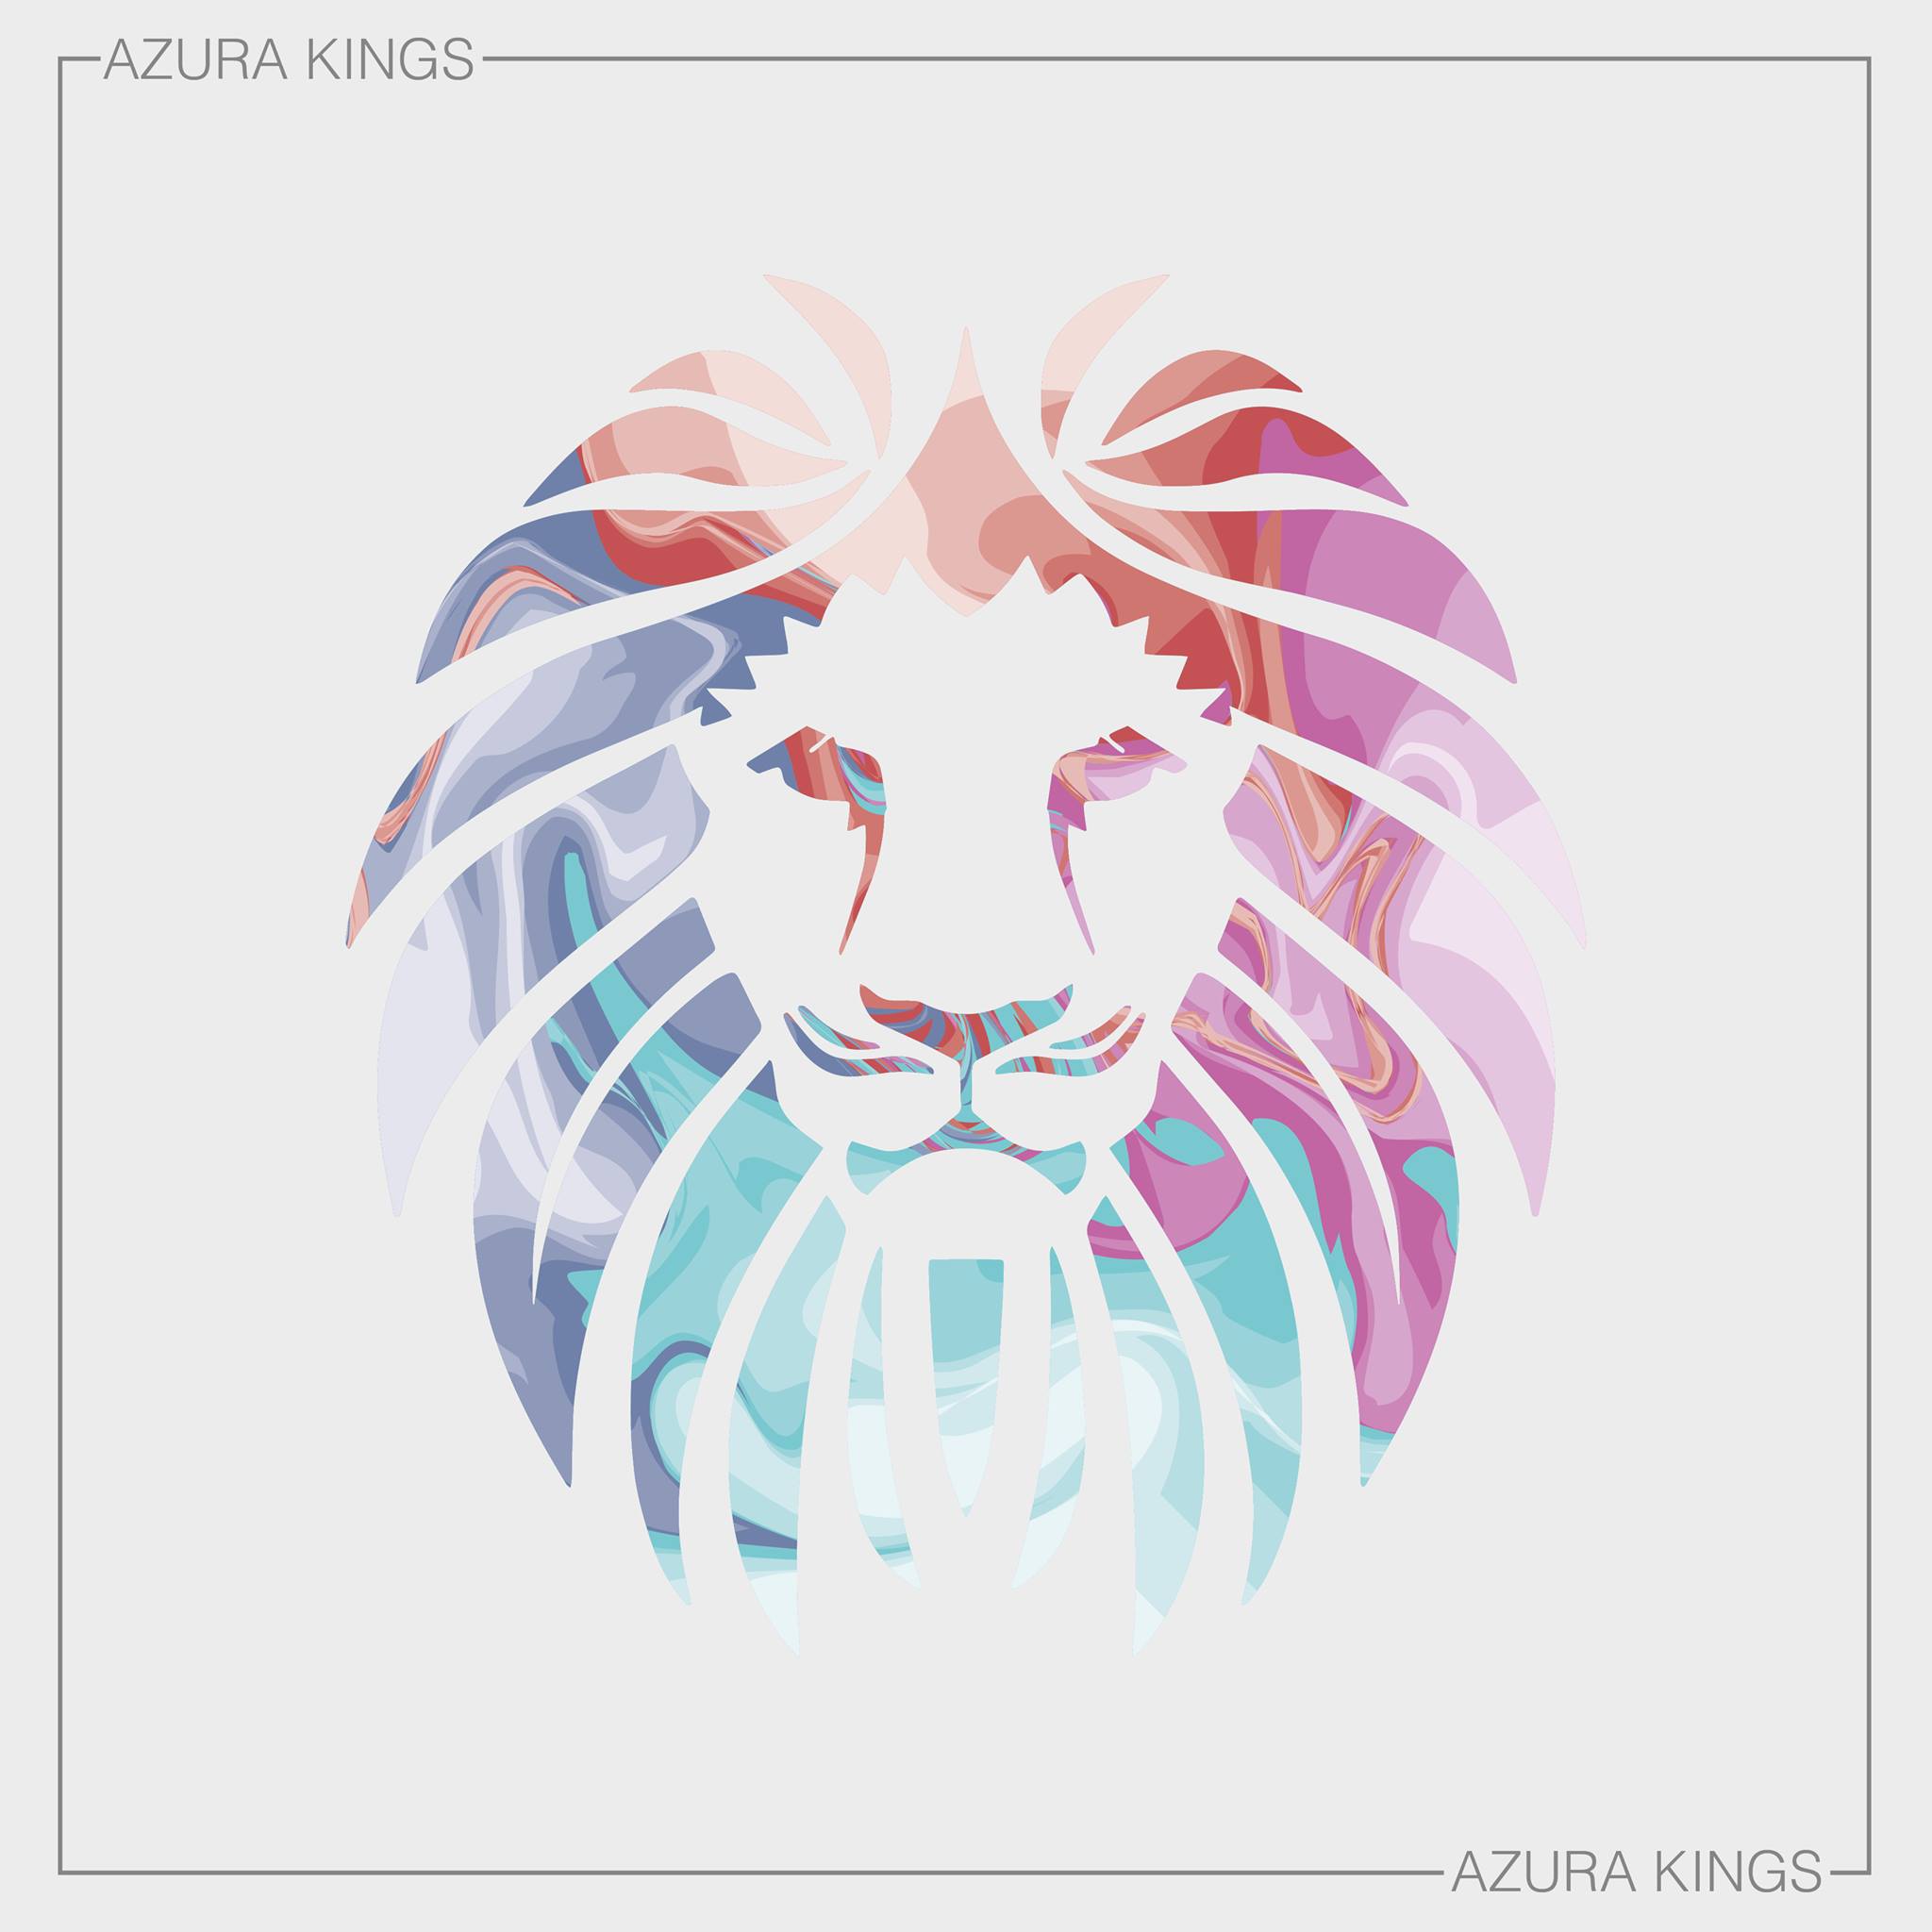 Azura Kings